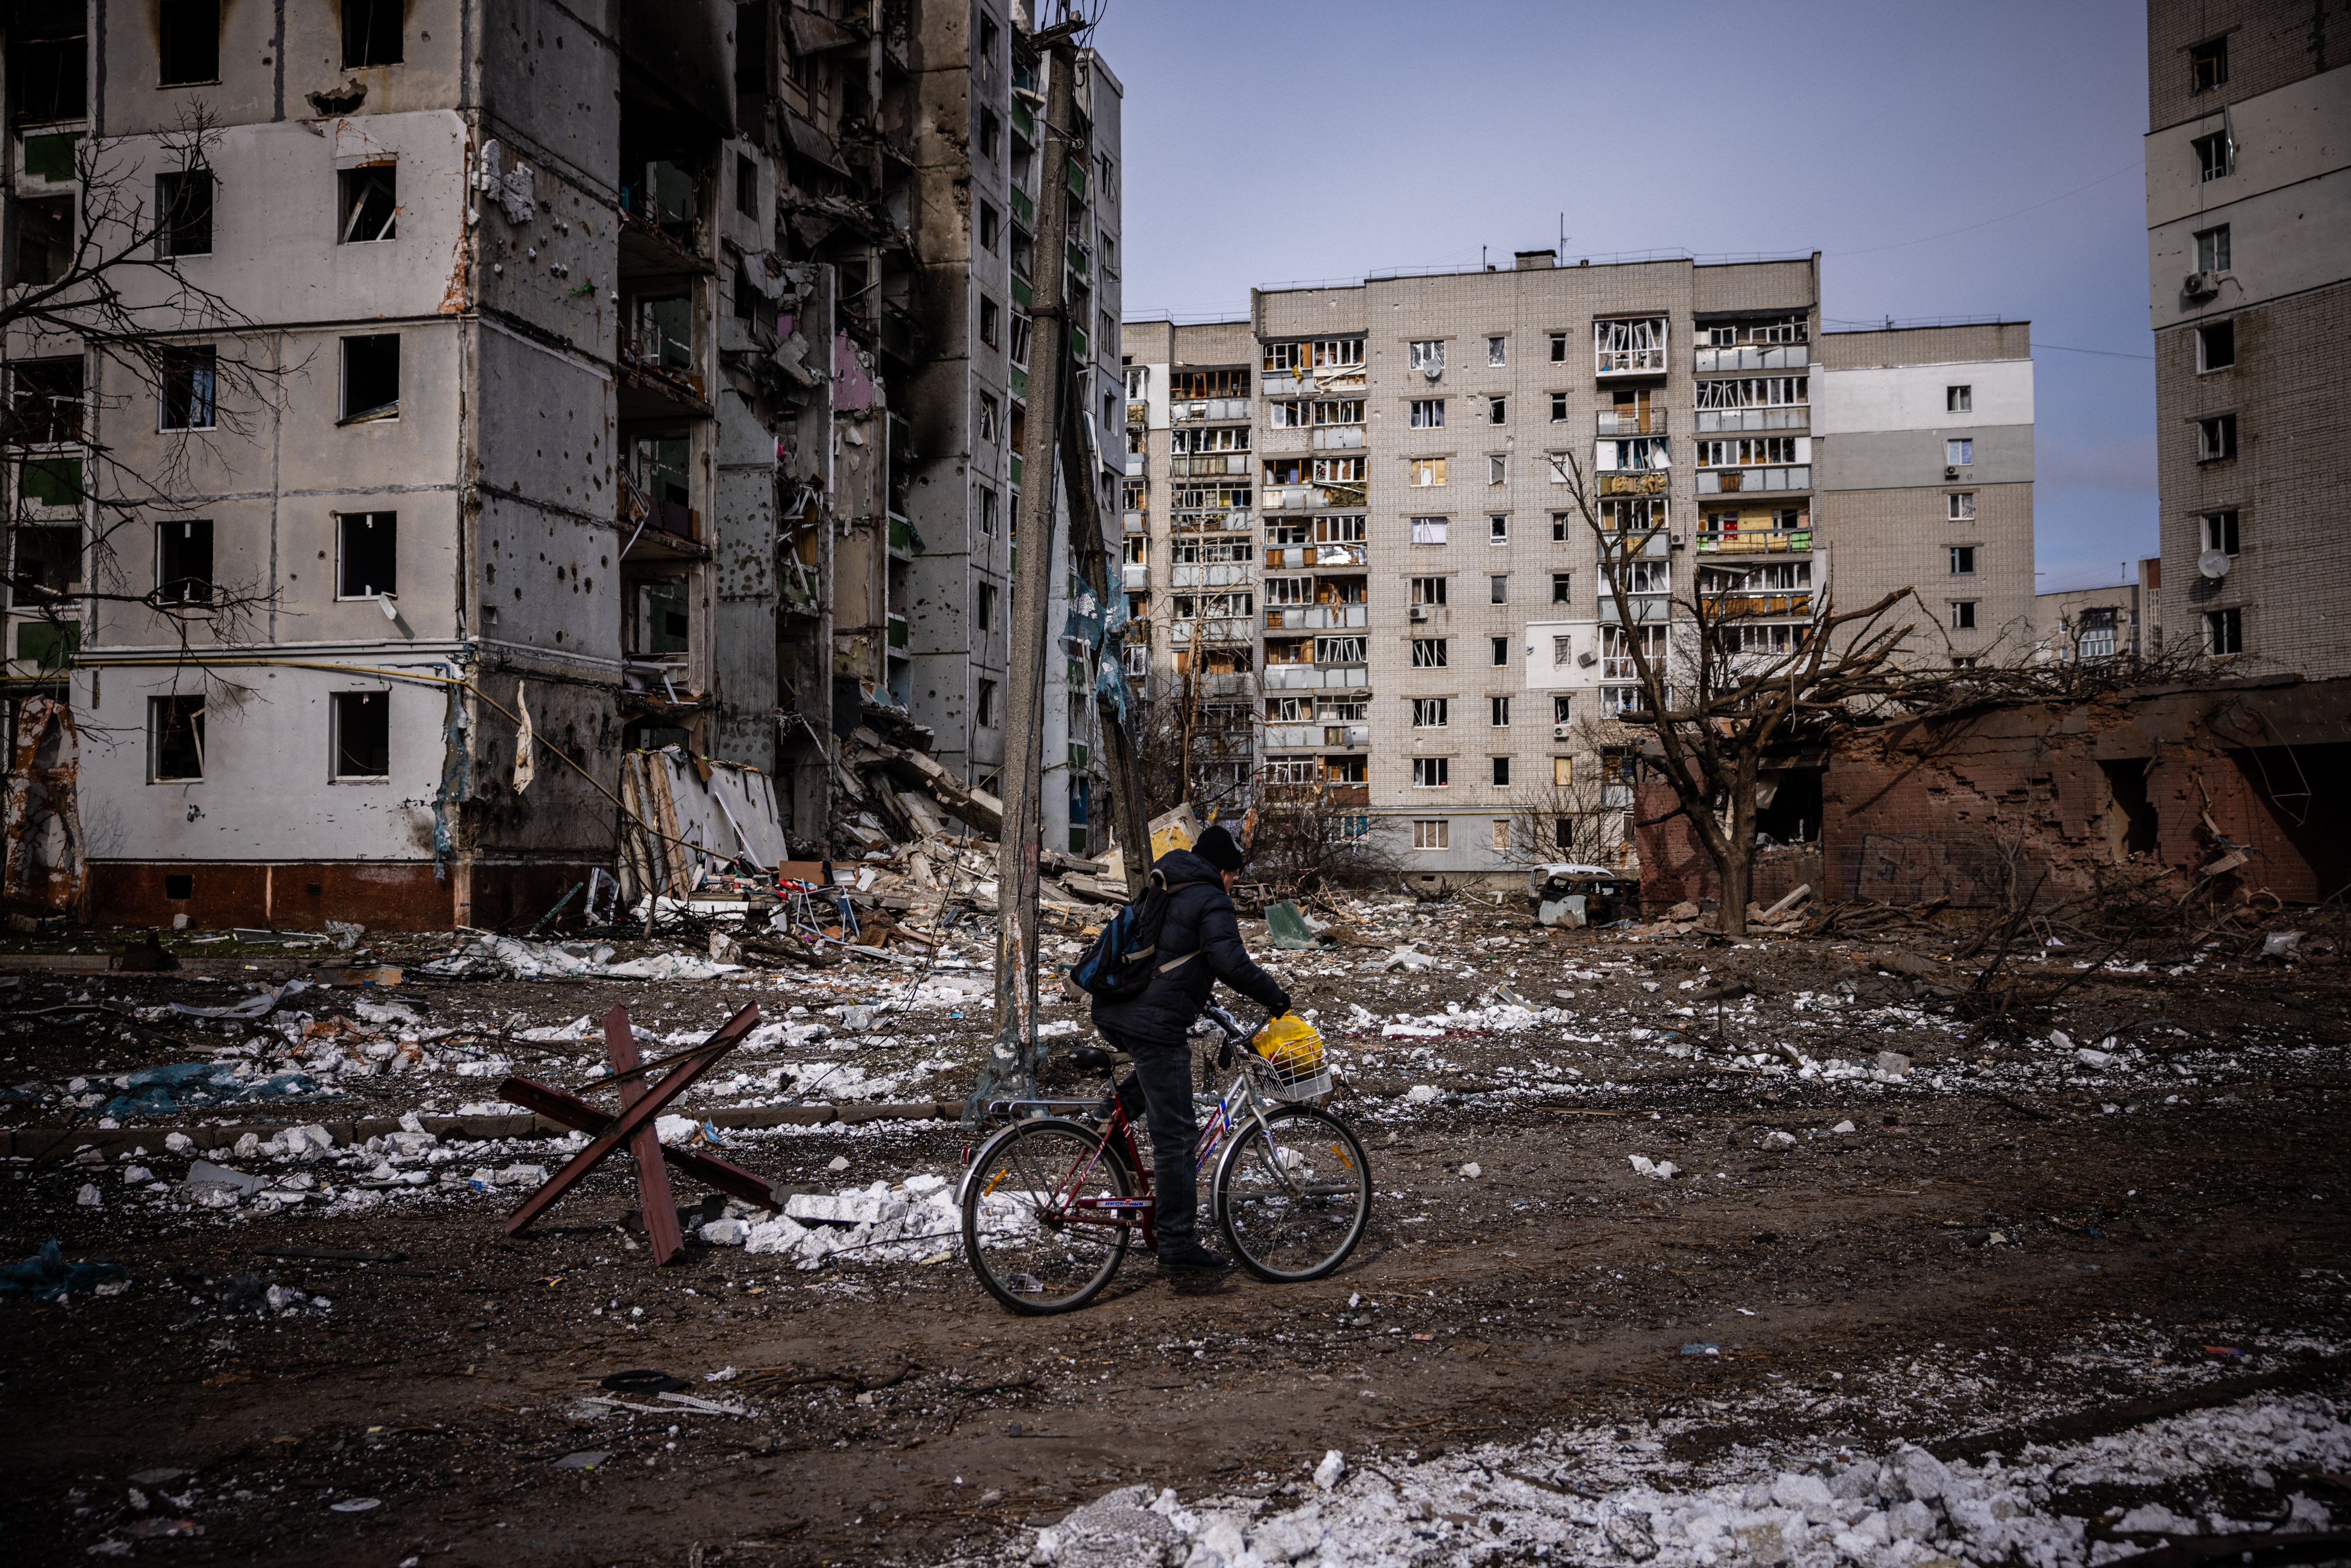 10 days of suffering. Russia's war against Ukraine in photos